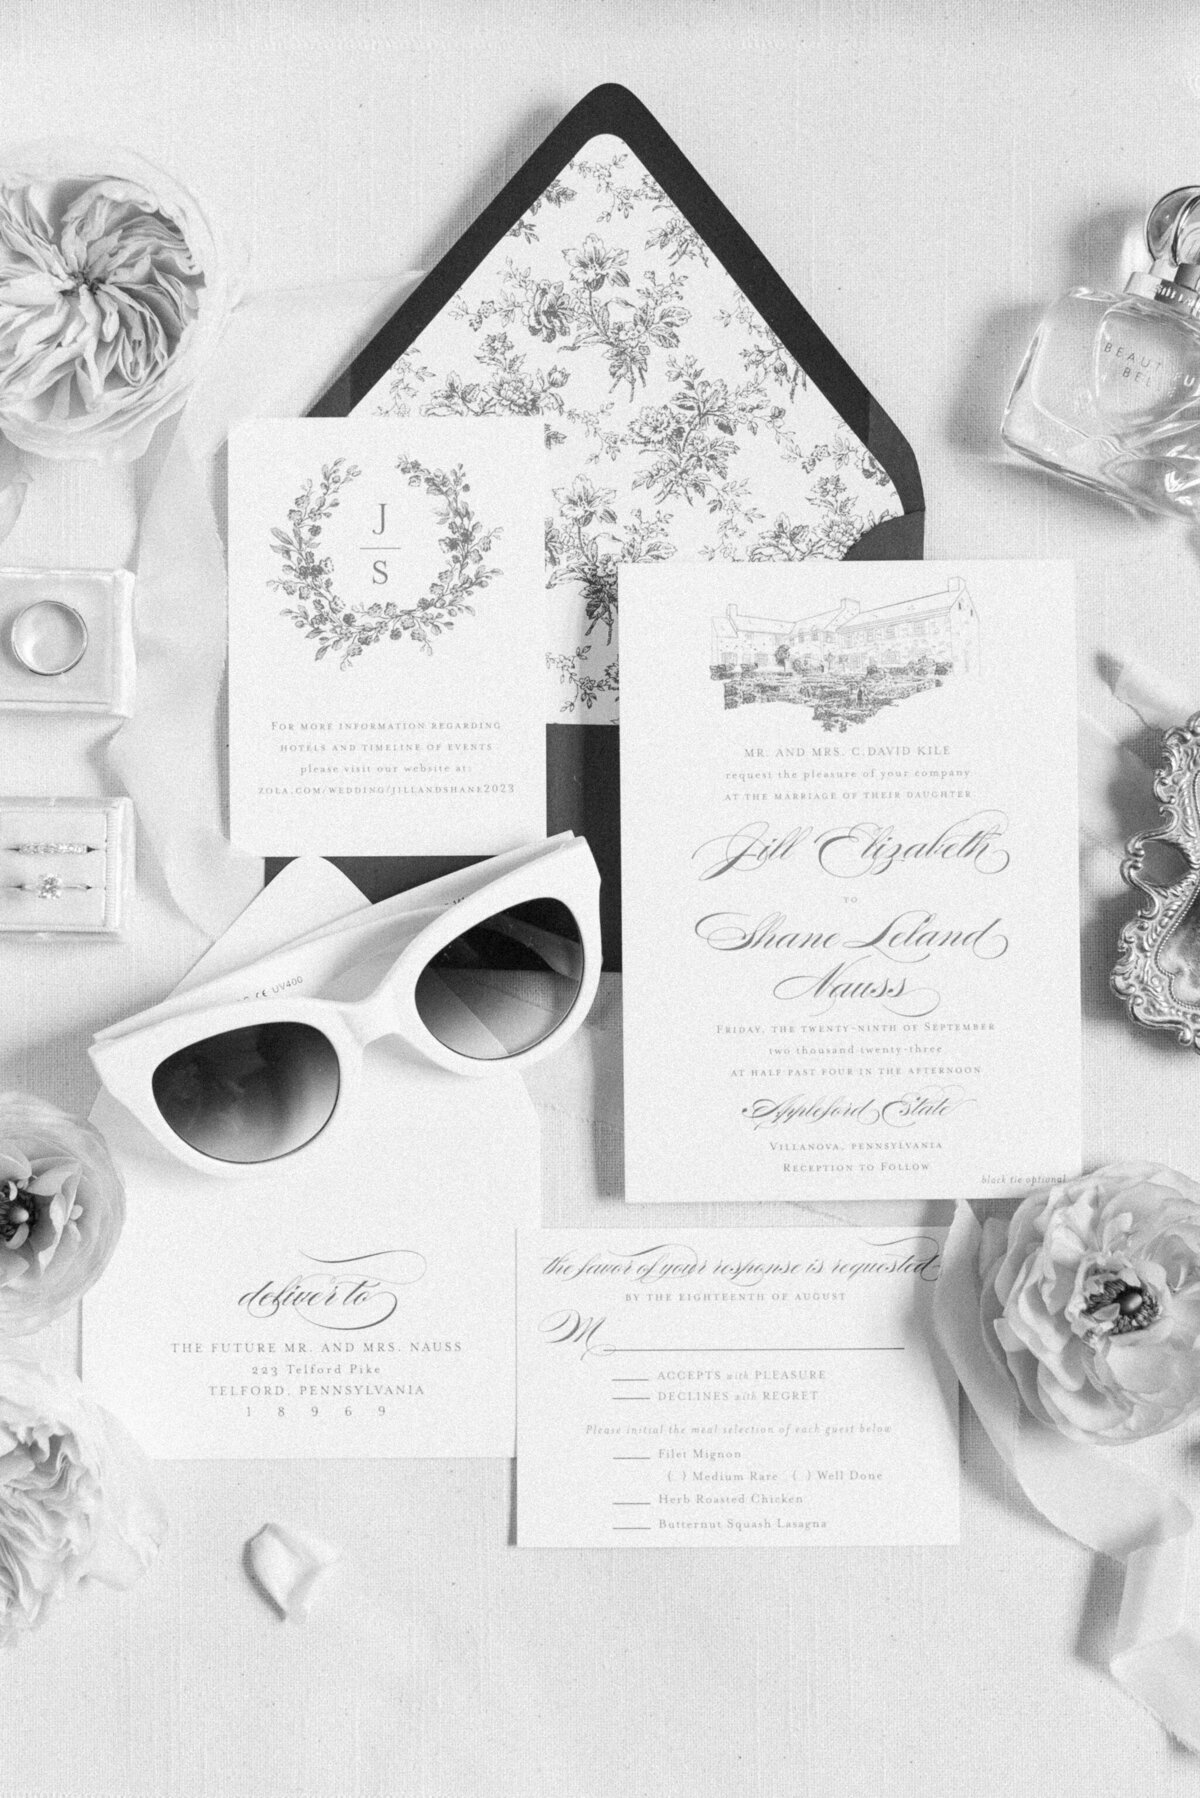 floral invitation suite with fun sunglasses for bride